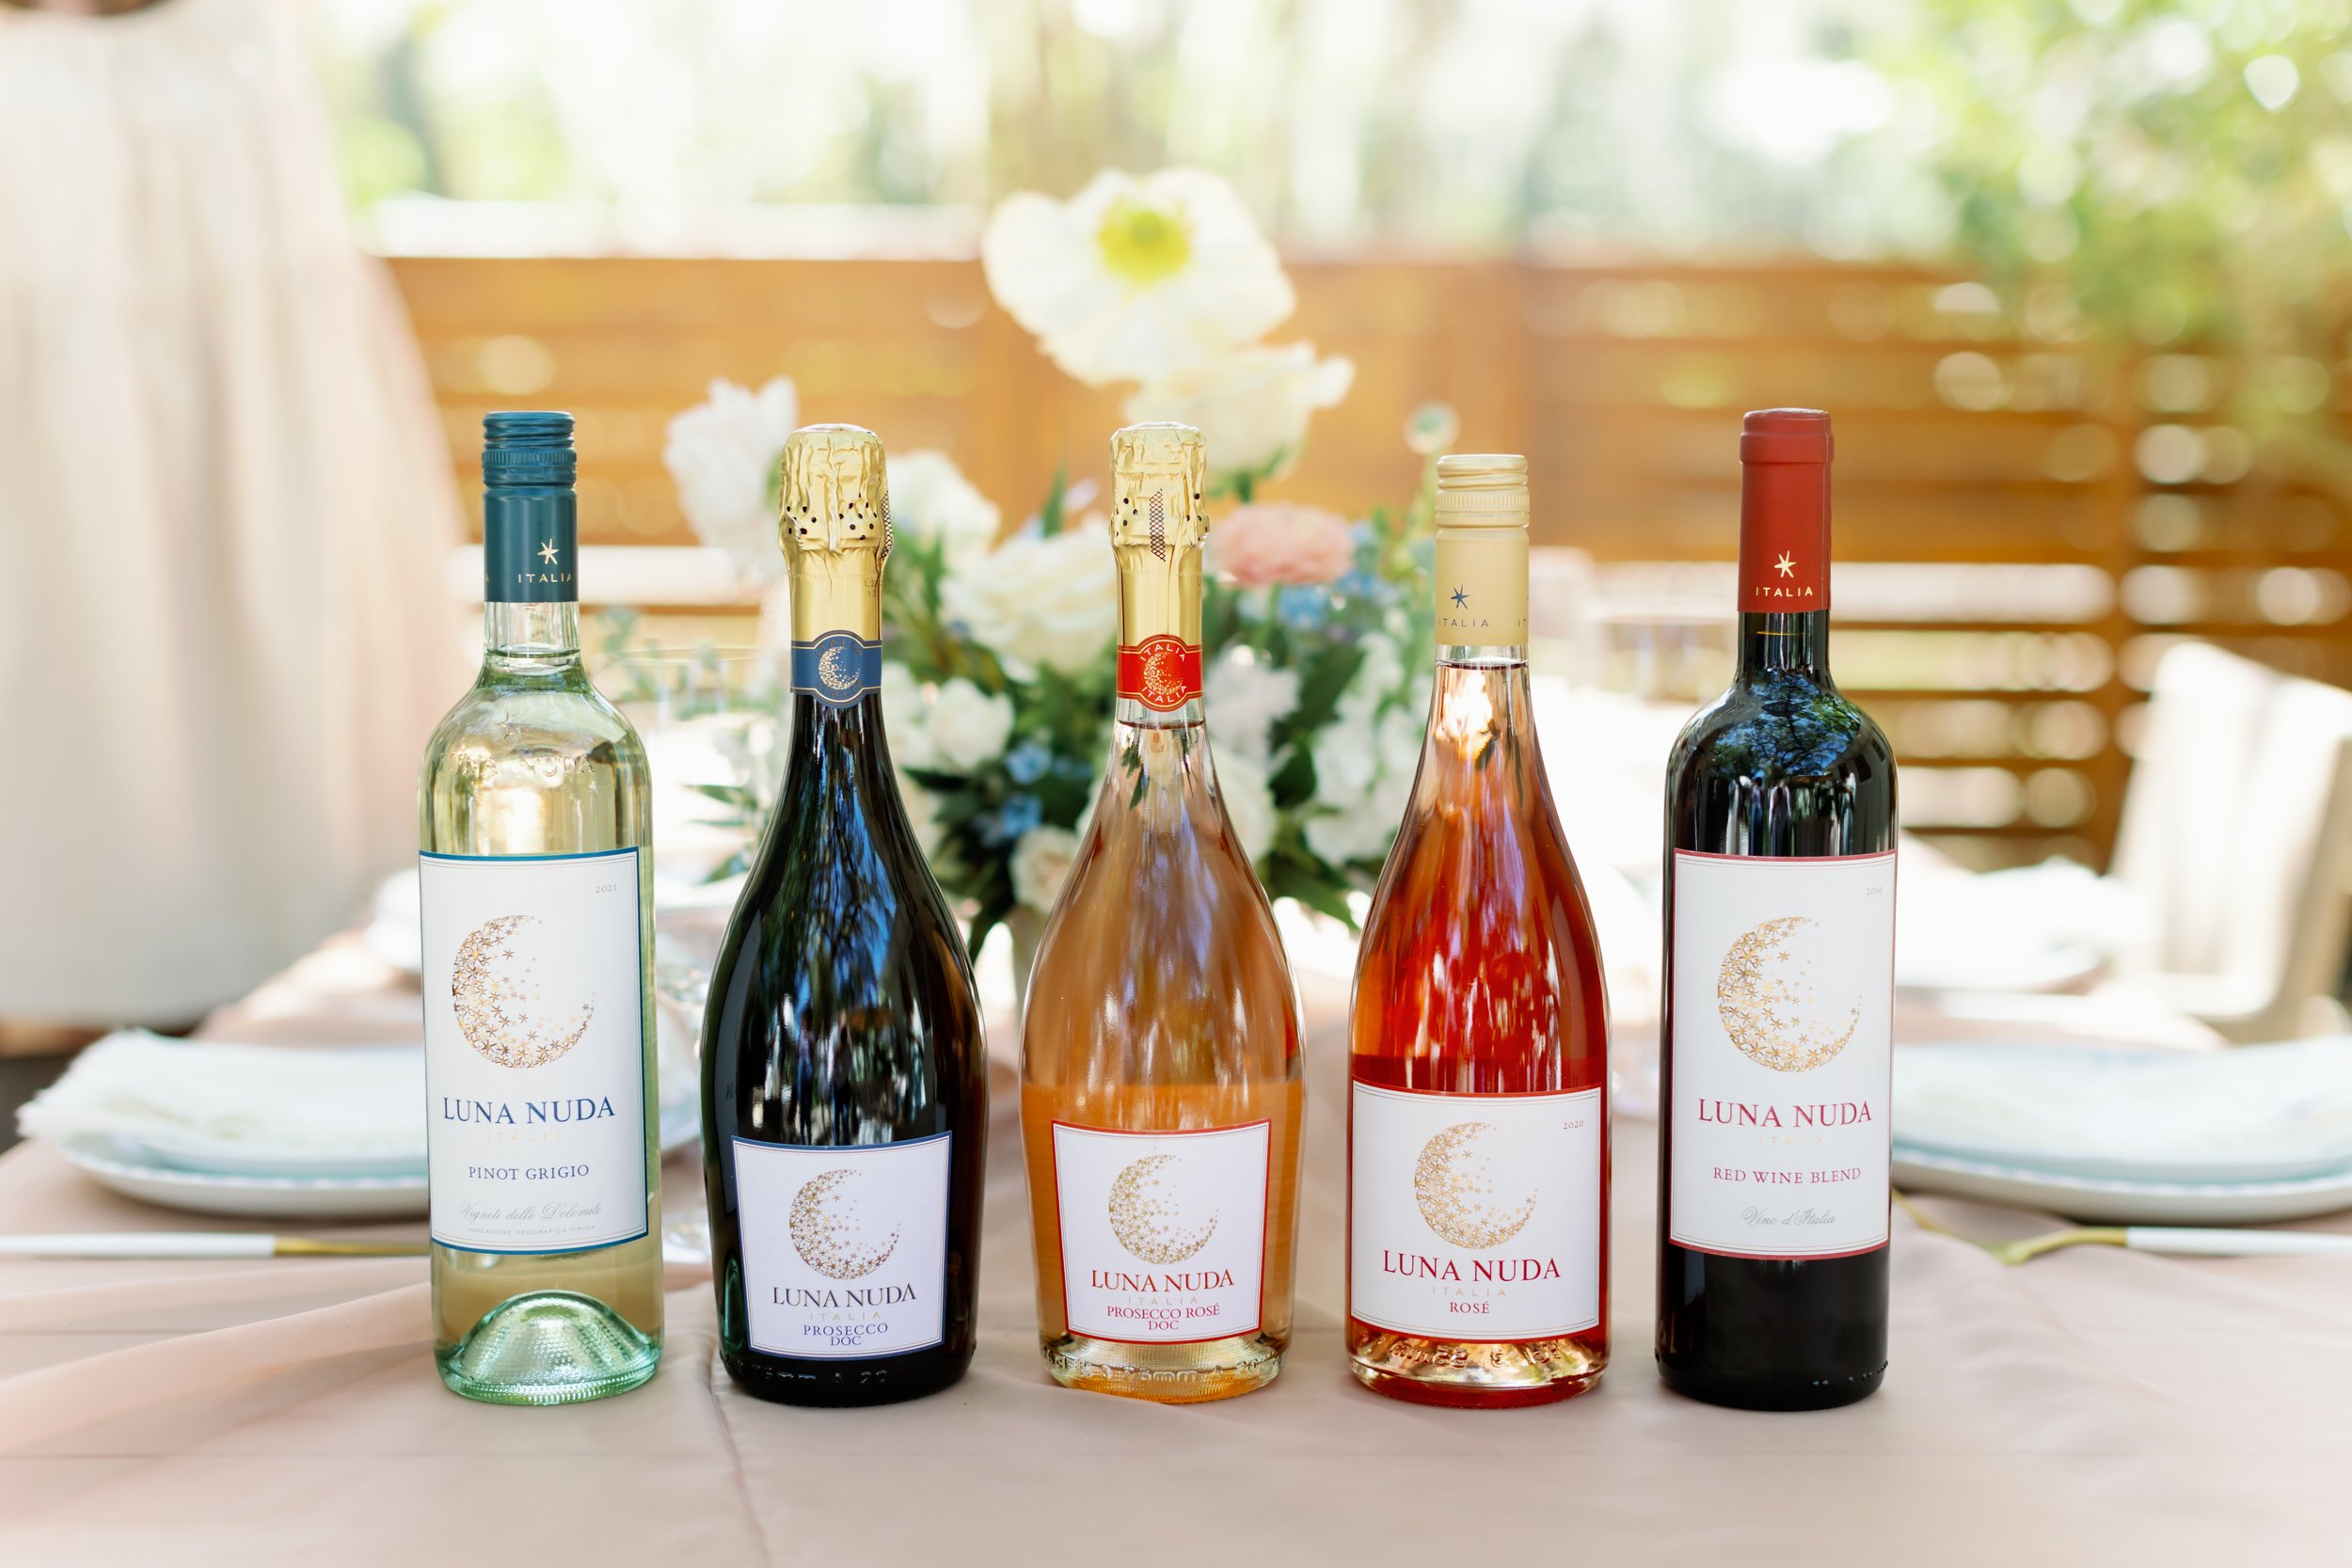 Mandarine Napoléon — Blue Ridge Spirits & Wine Marketing